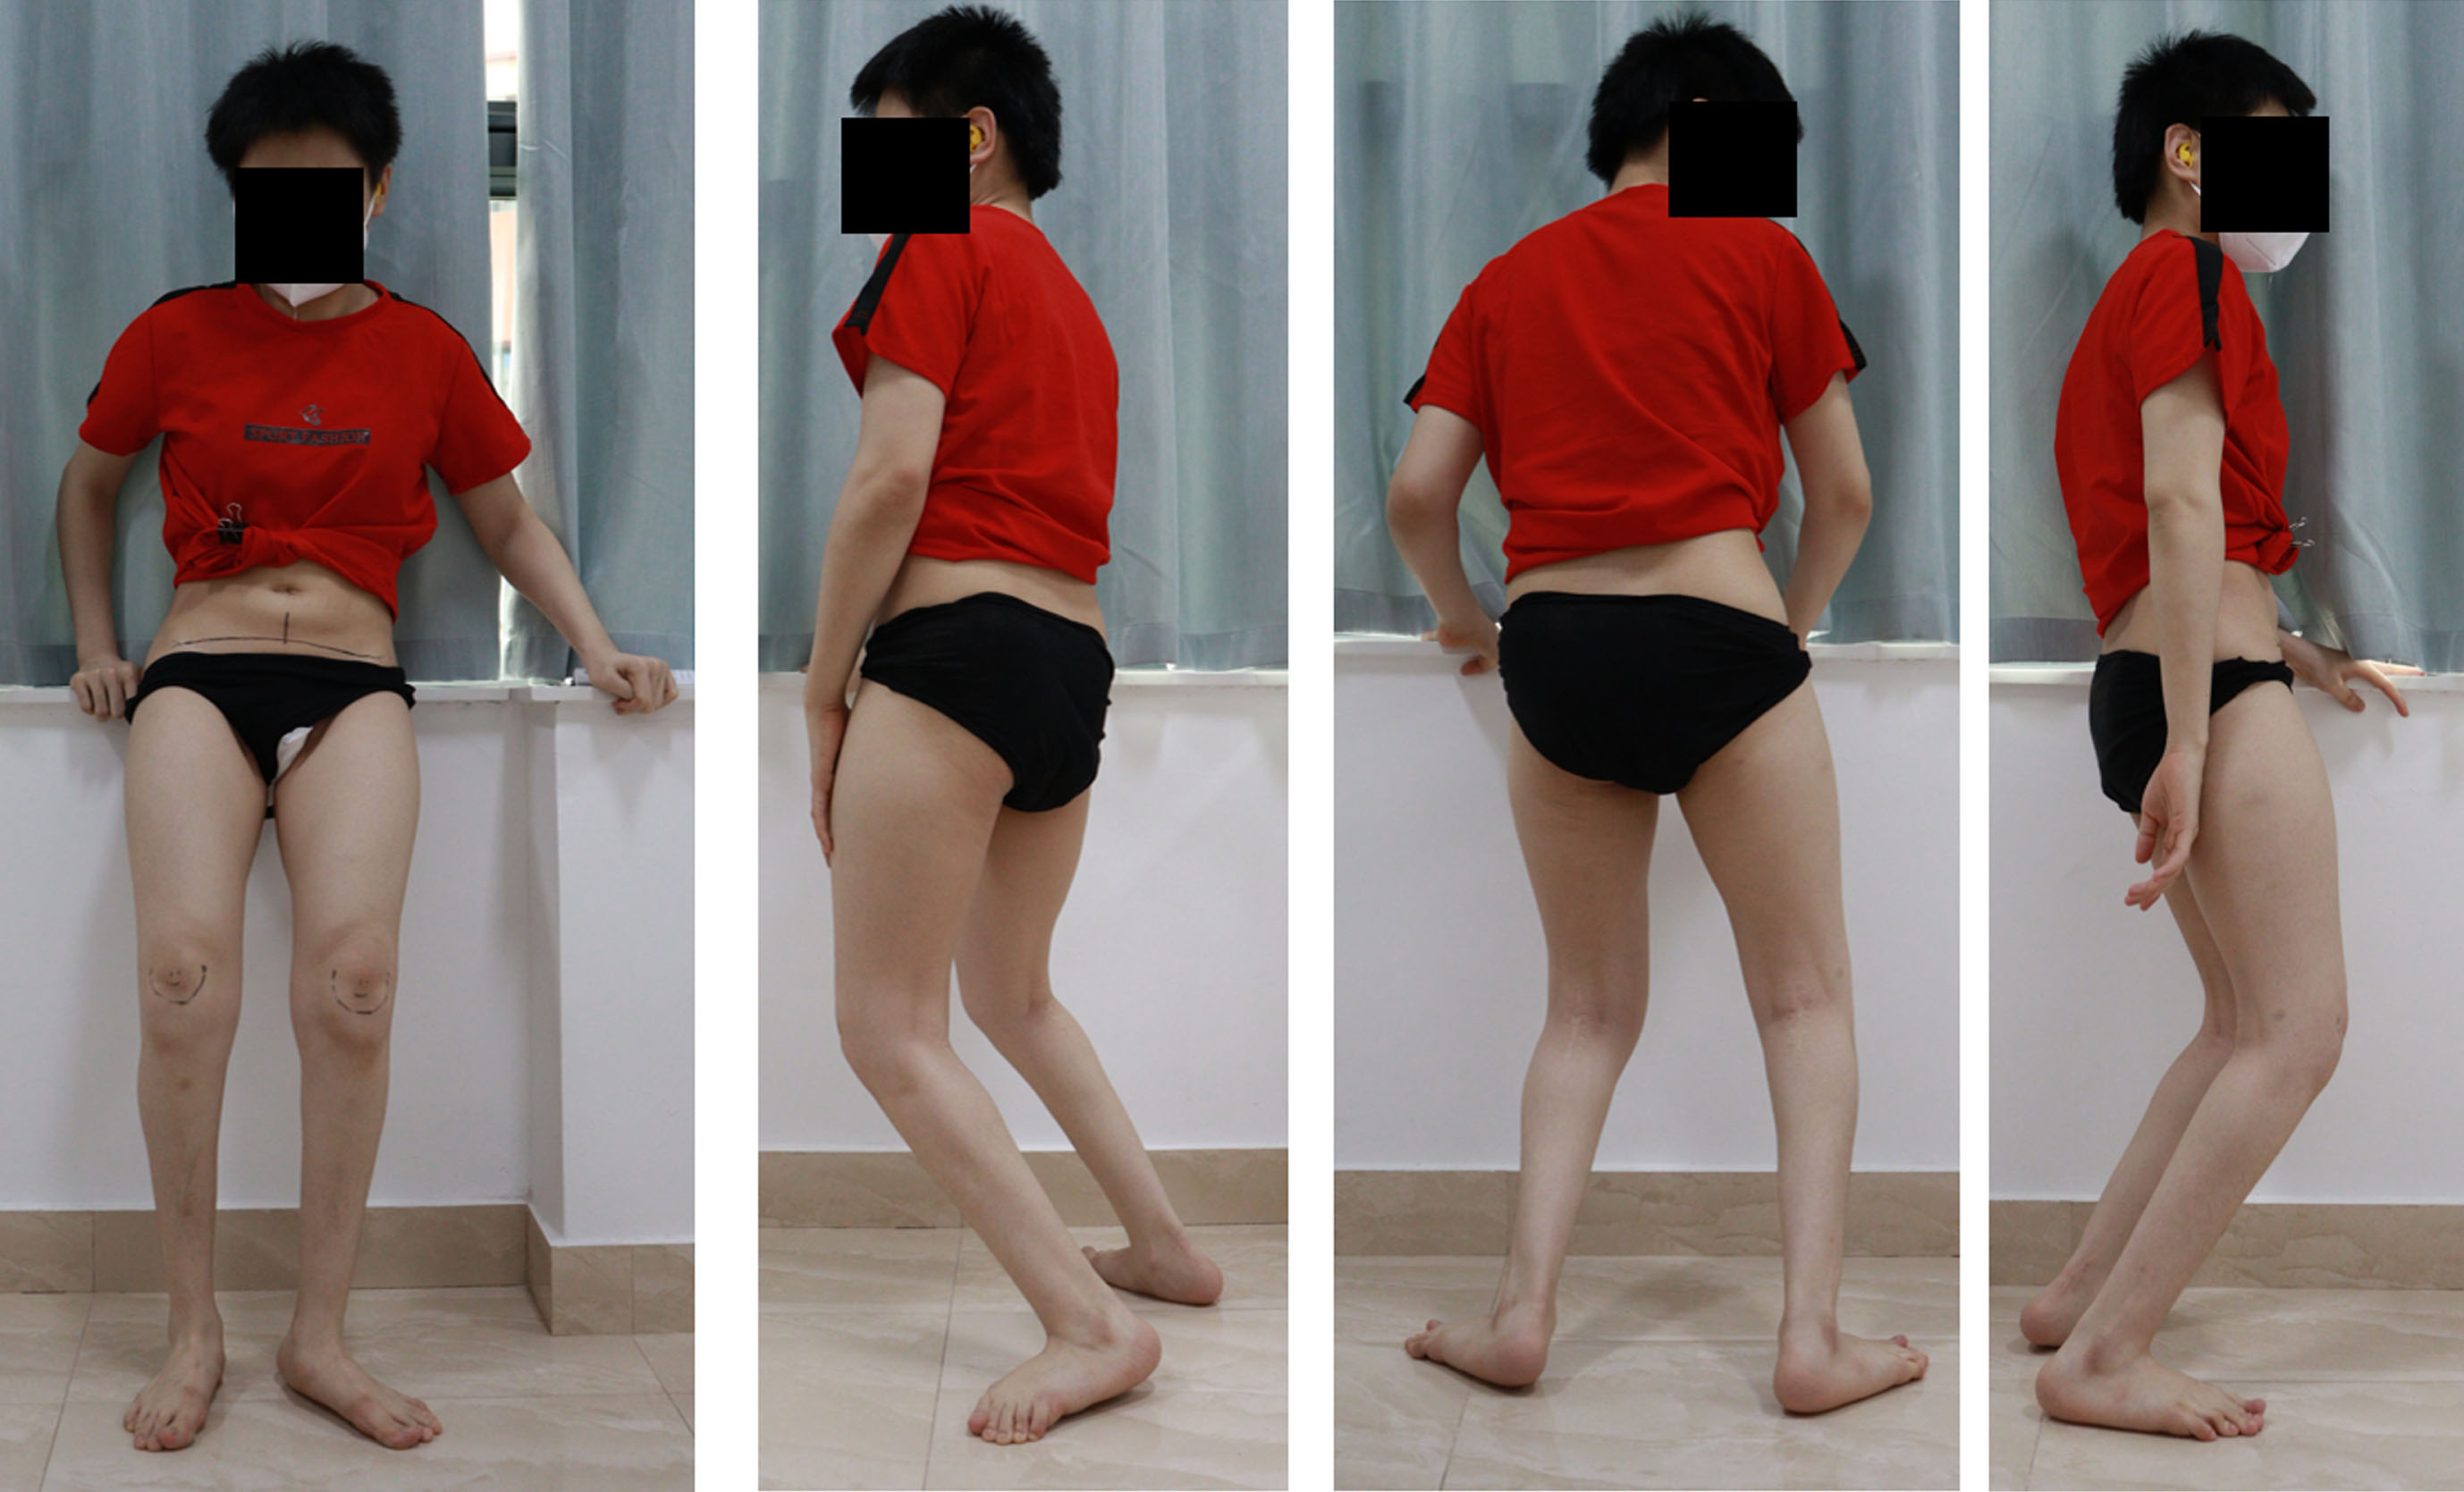 Standing posture reveals flexed hip, flexed knee, and ankle dorsiflexion with anterior pelvic rotation.